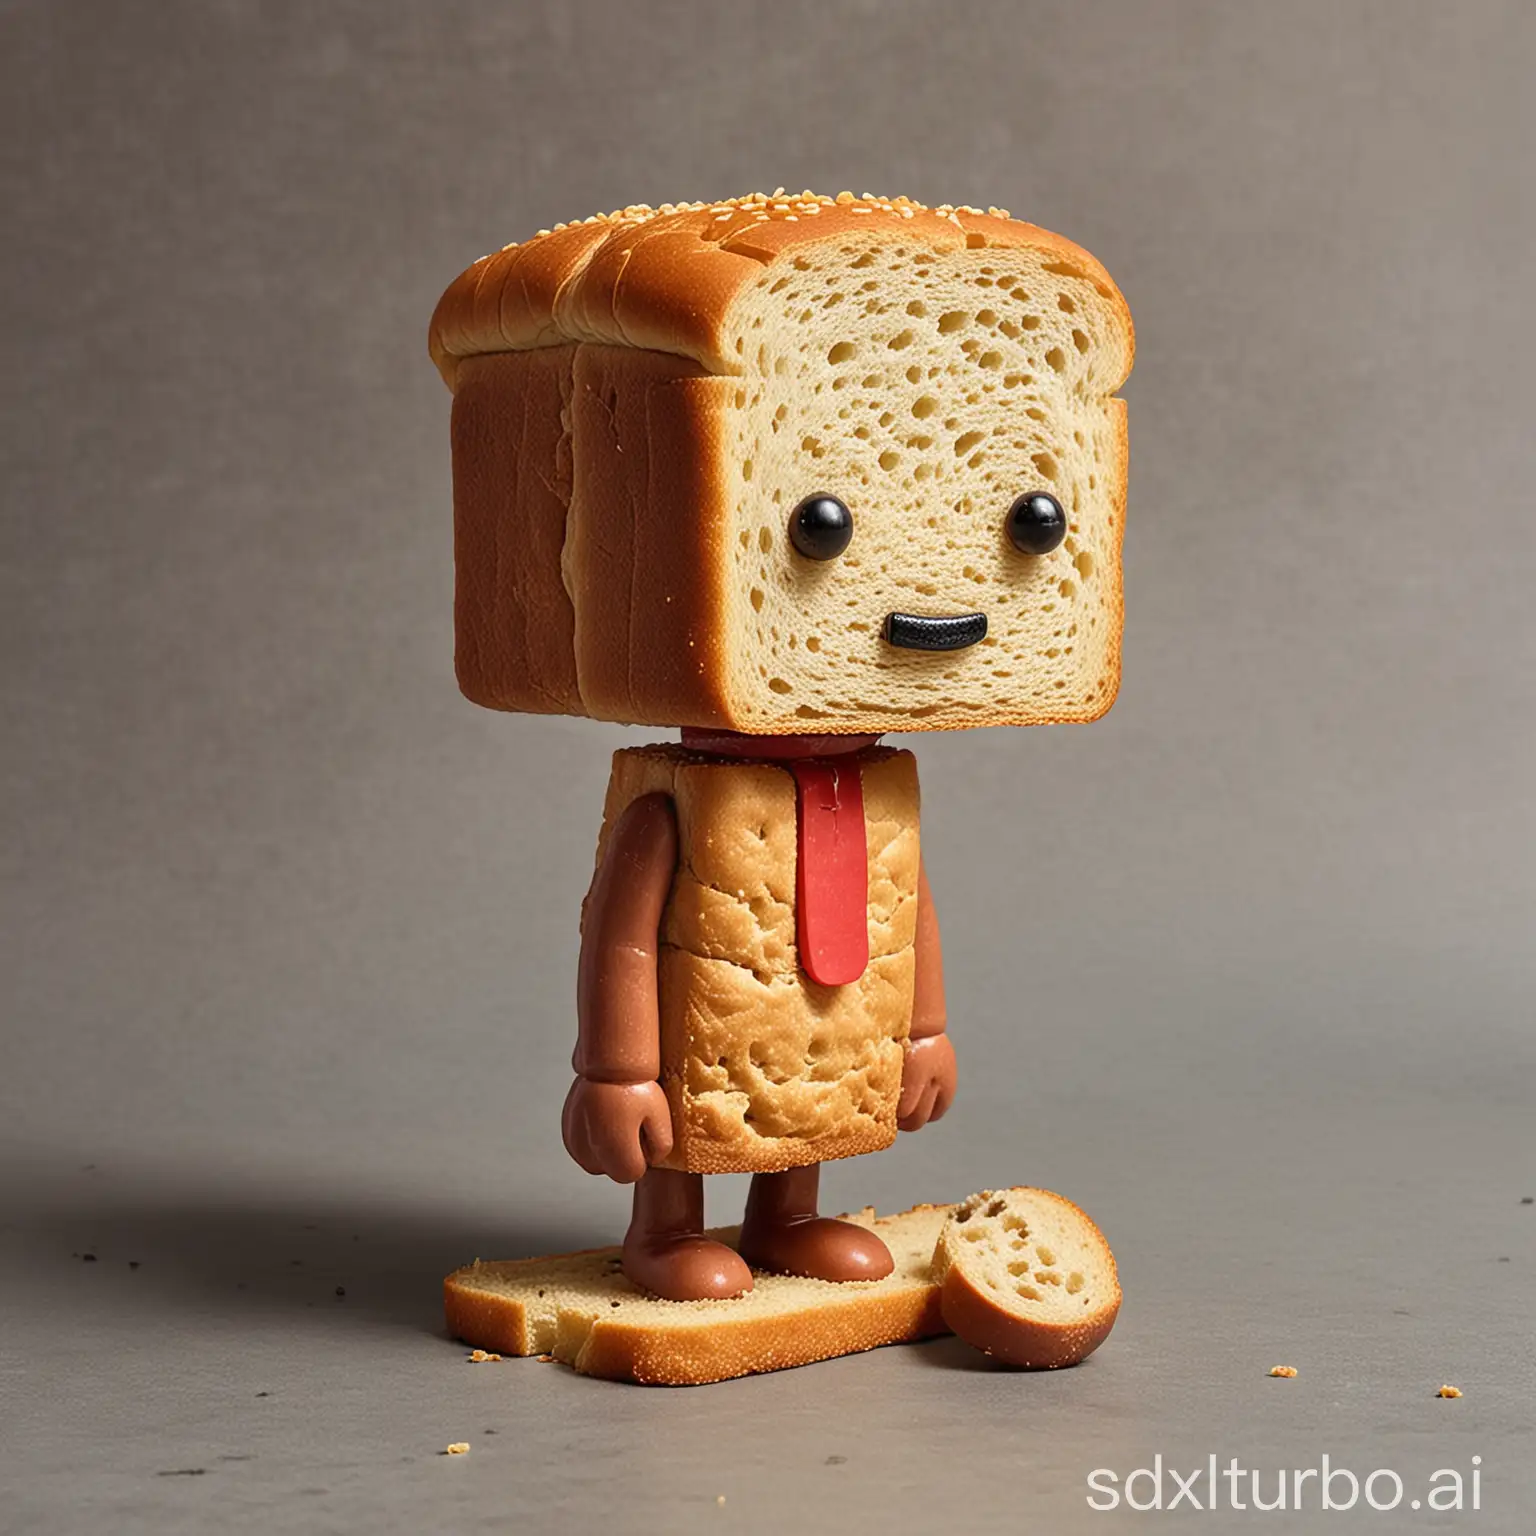 Wooden-Blockhead-Sculpture-with-Sausage-Bread-Unique-Culinary-Art-Installation